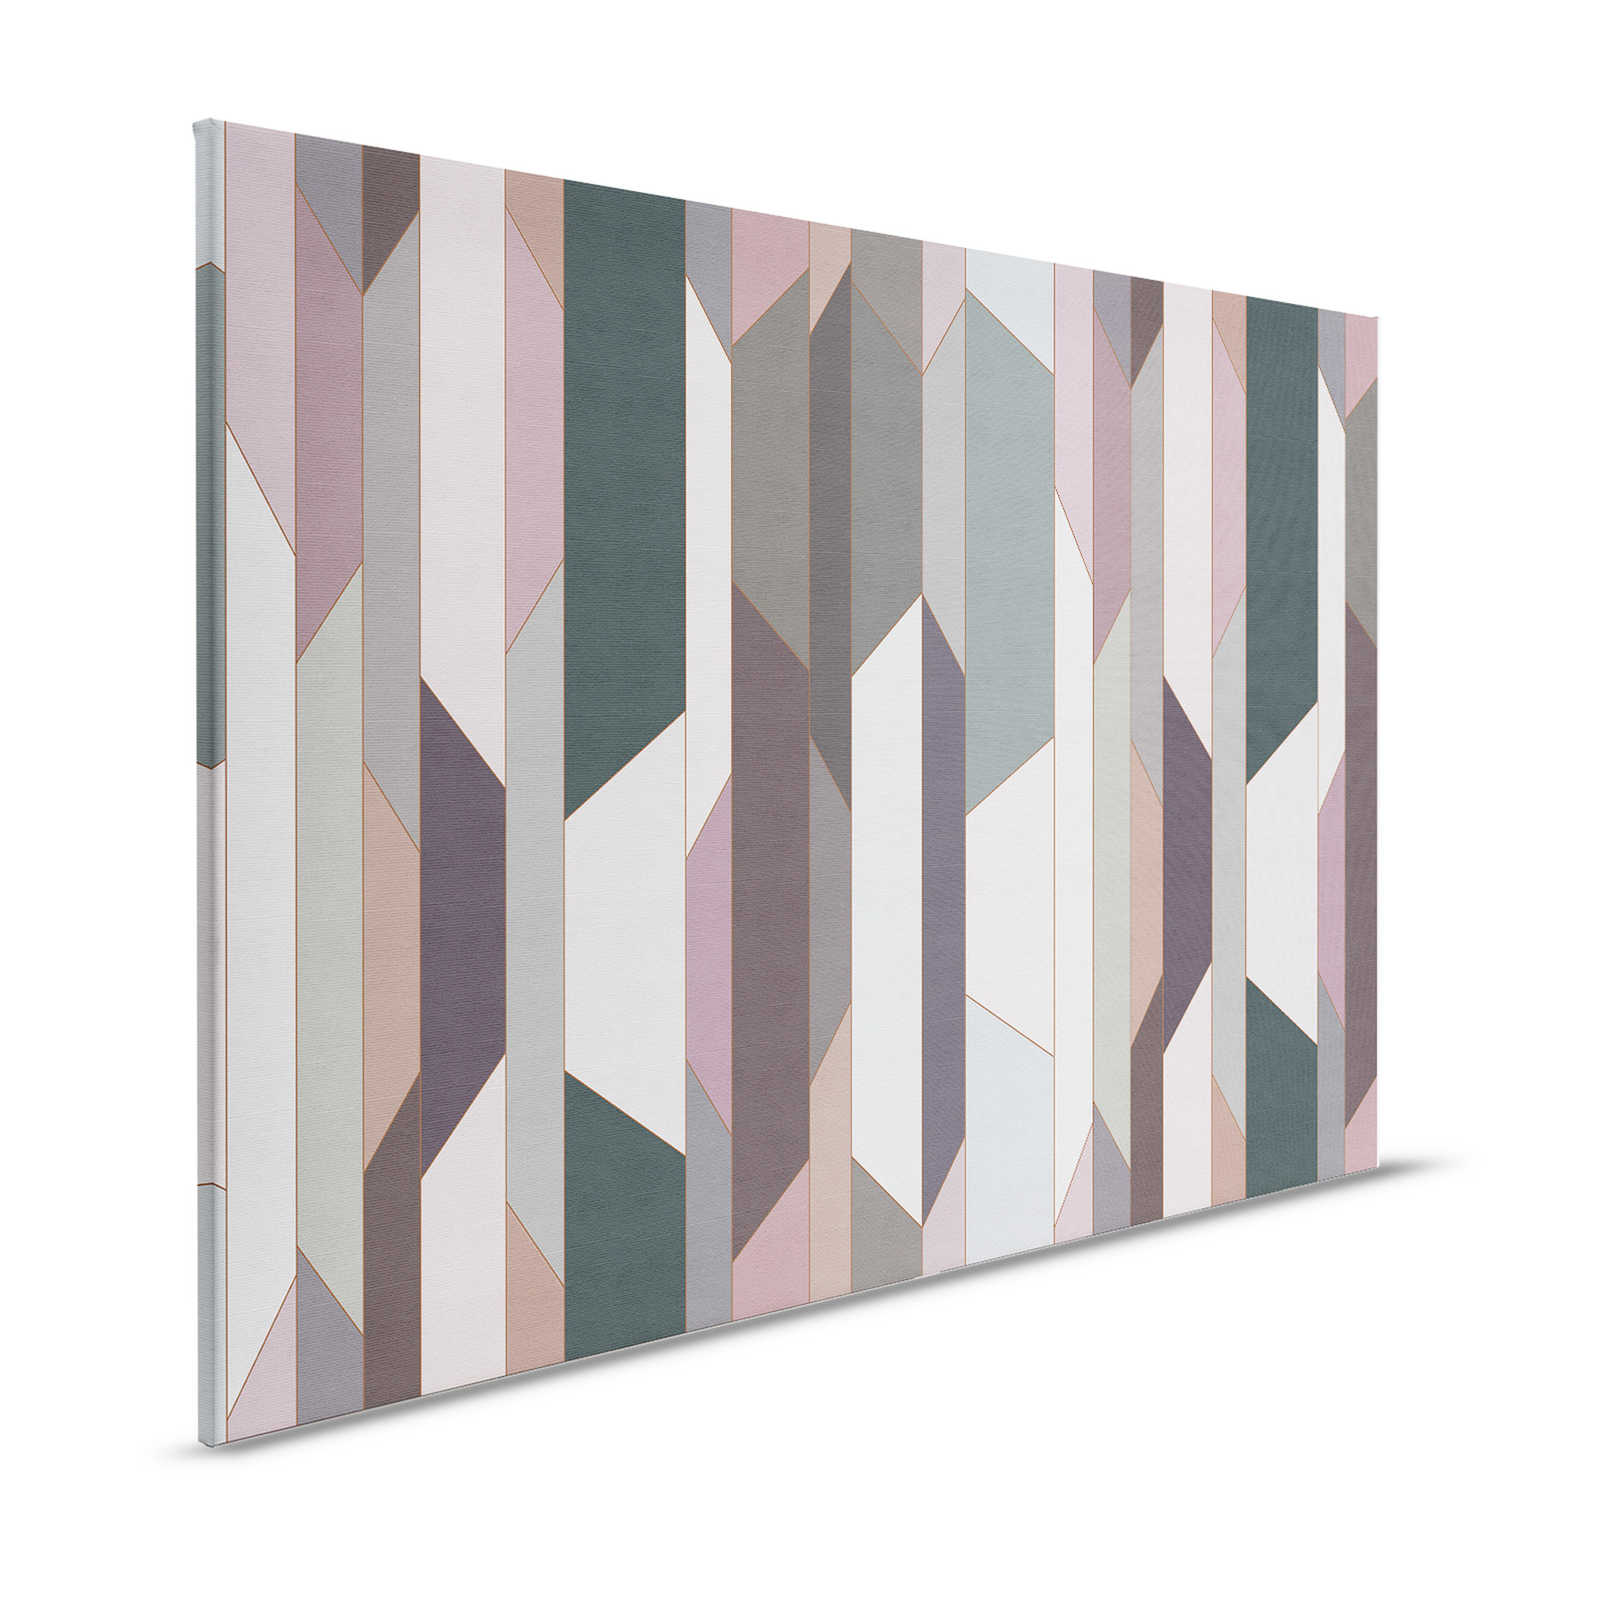 Fold 2 - Canvas painting with geometric retro pattern - 1.20 m x 0.80 m
